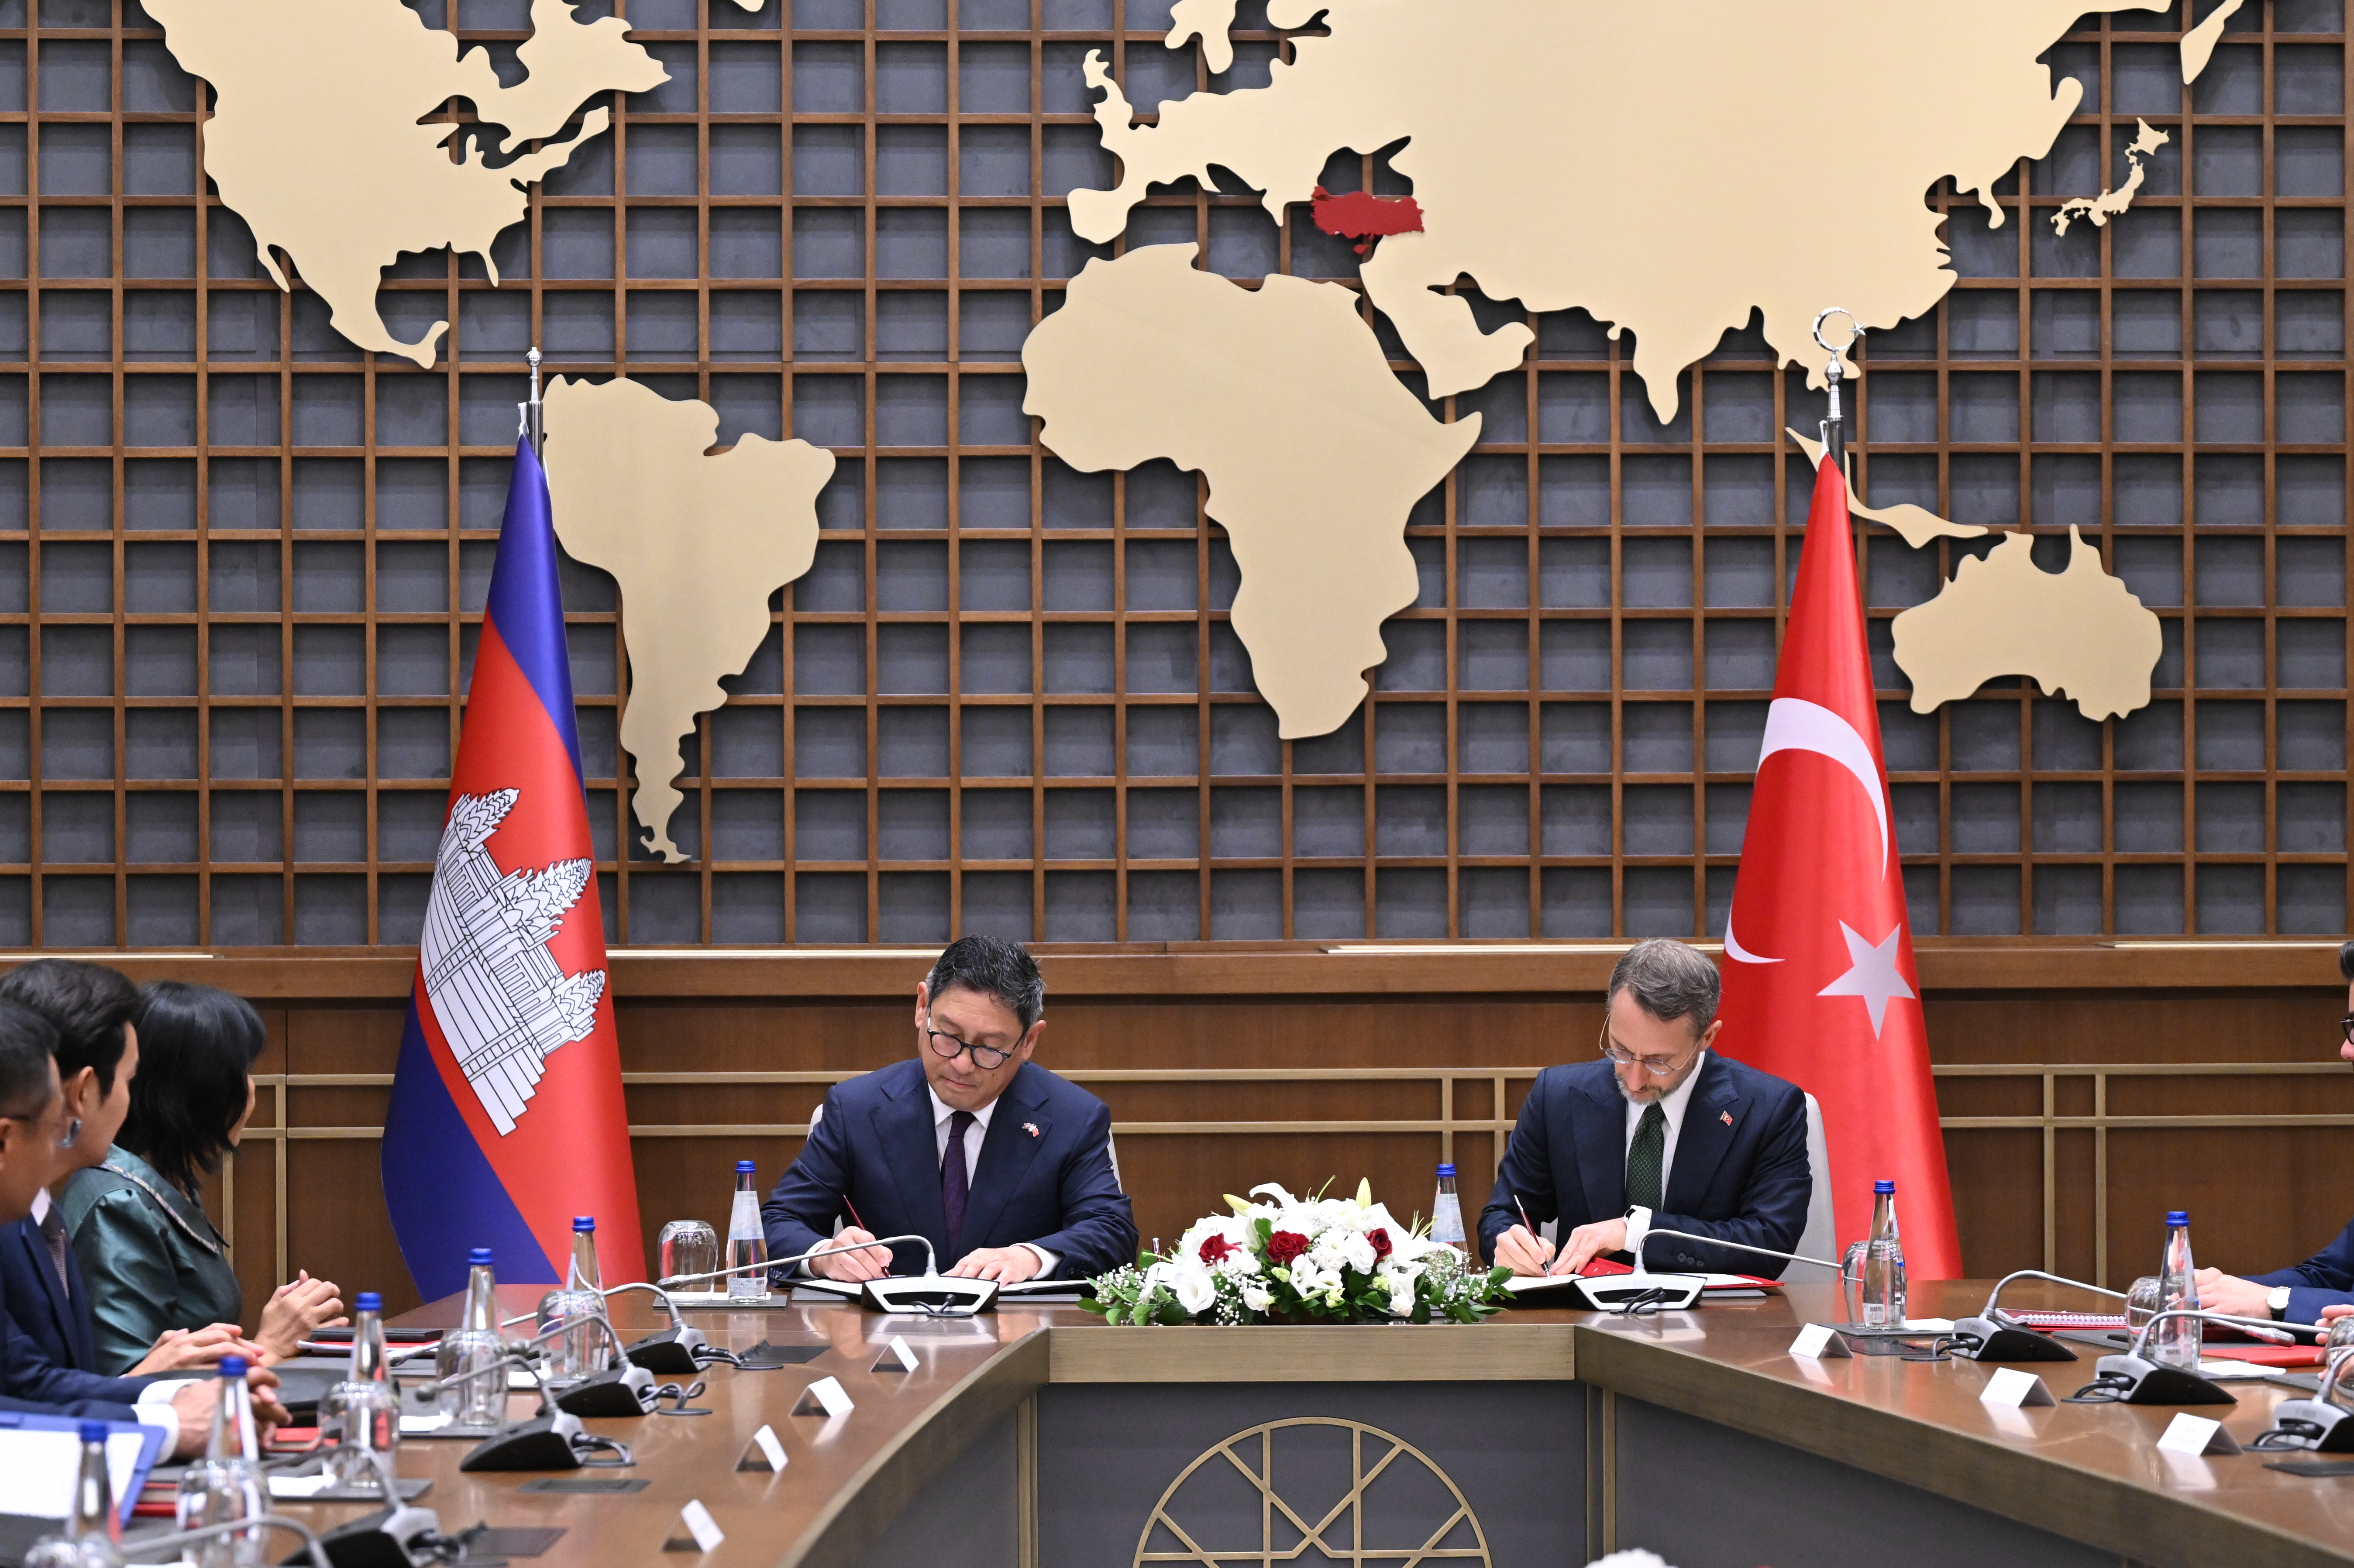 Türkiye and Cambodia forge media partnership for mutual growth